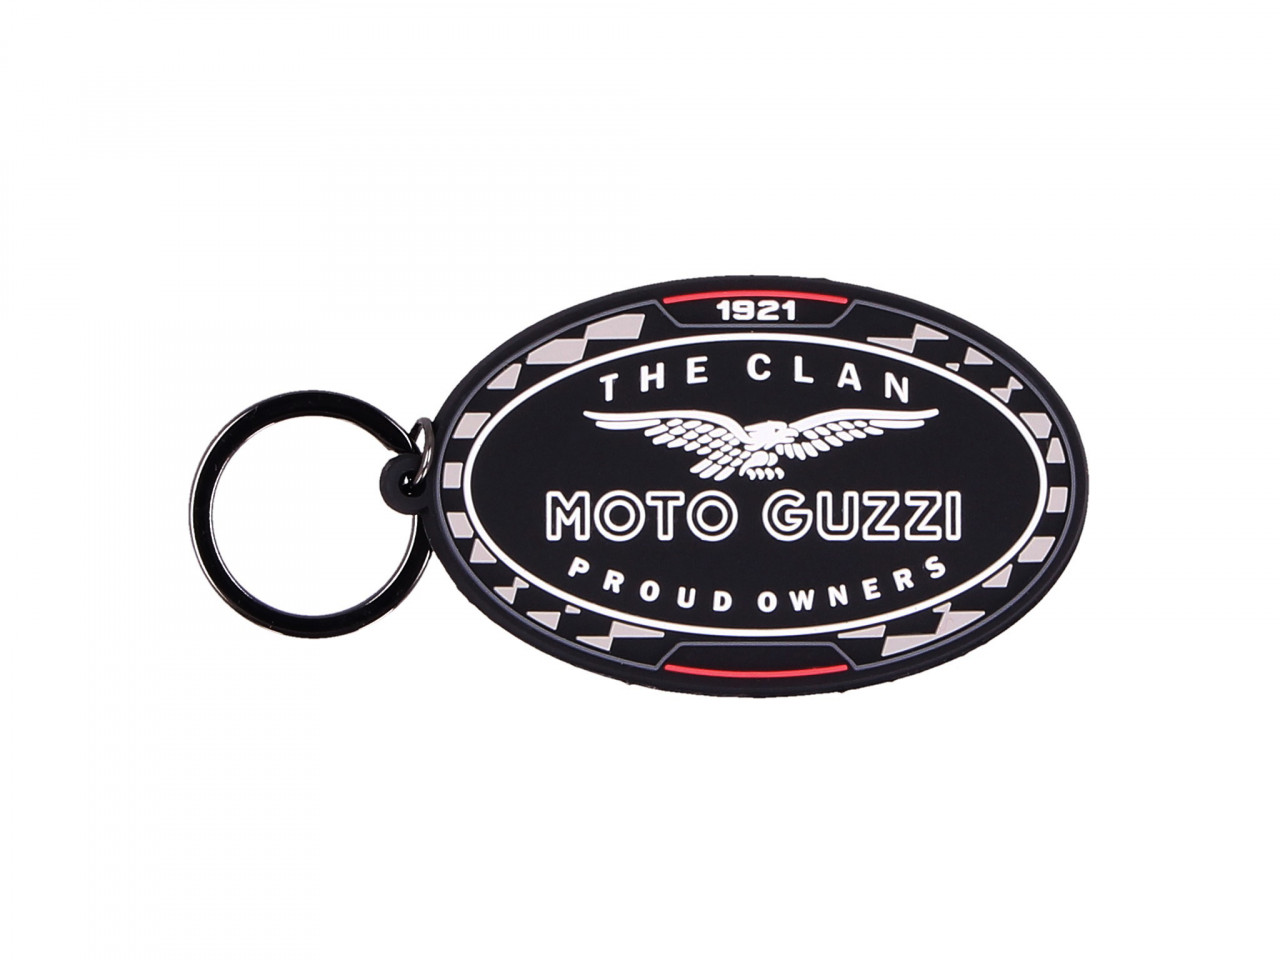 Porte-clés Moto Guzzi  The Clan